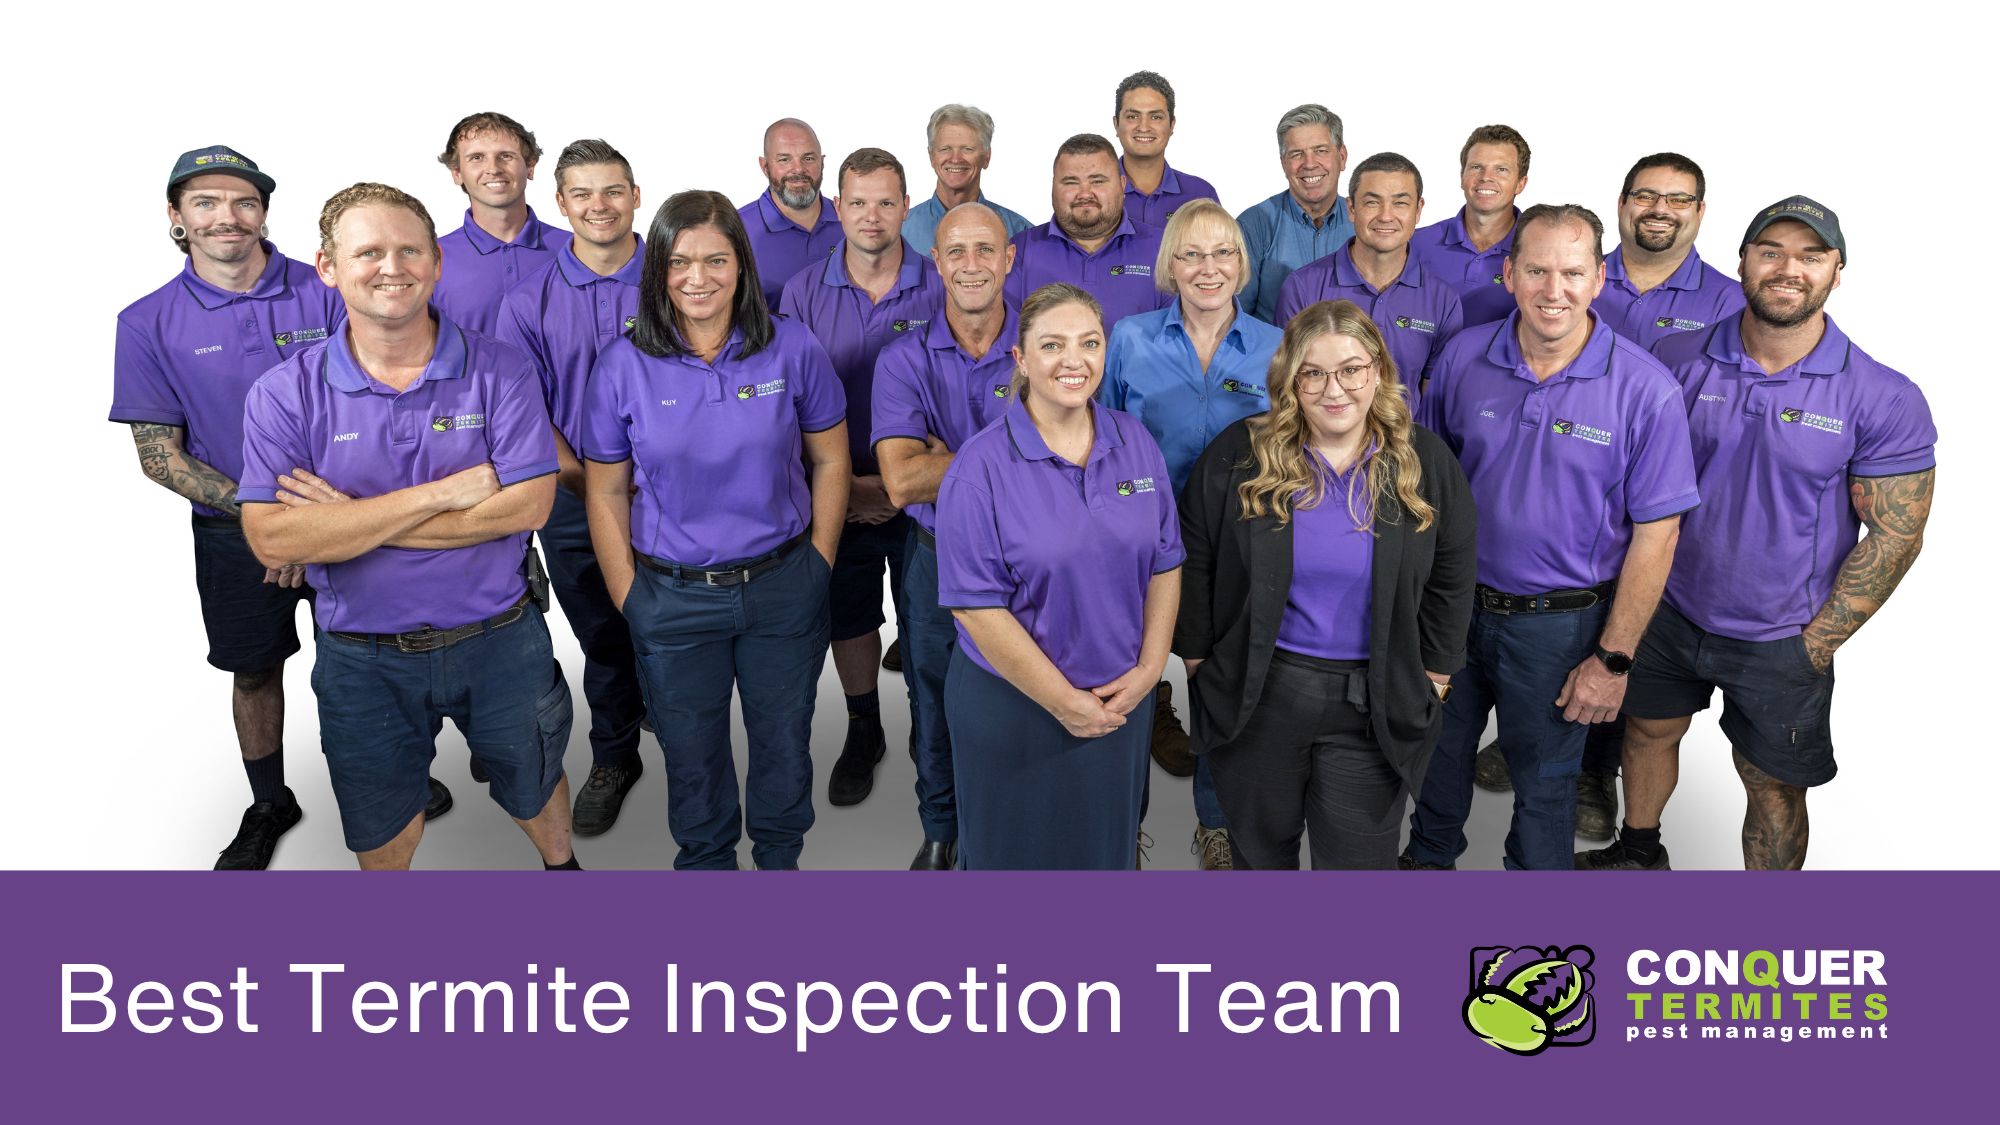 Conquer termites’ inspection team